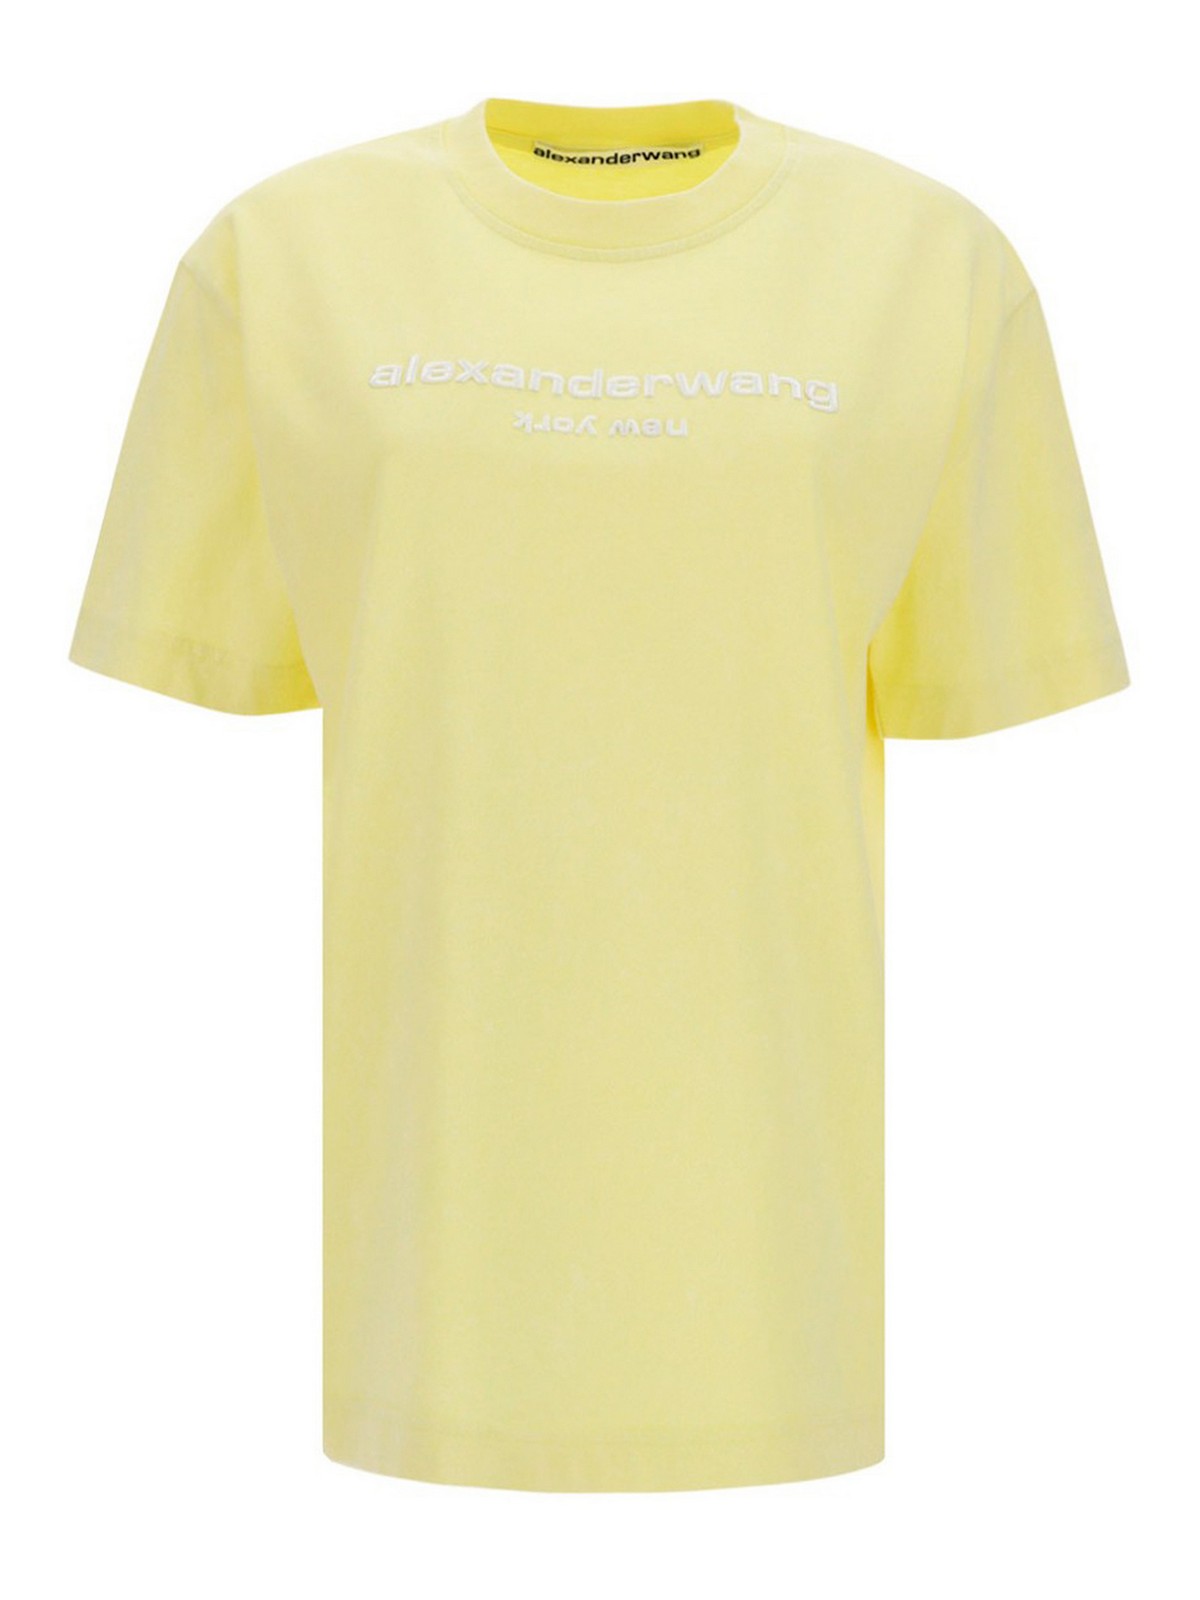 Tシャツ Alexander Wang - Tシャツ - イエロー - UCC1211030743